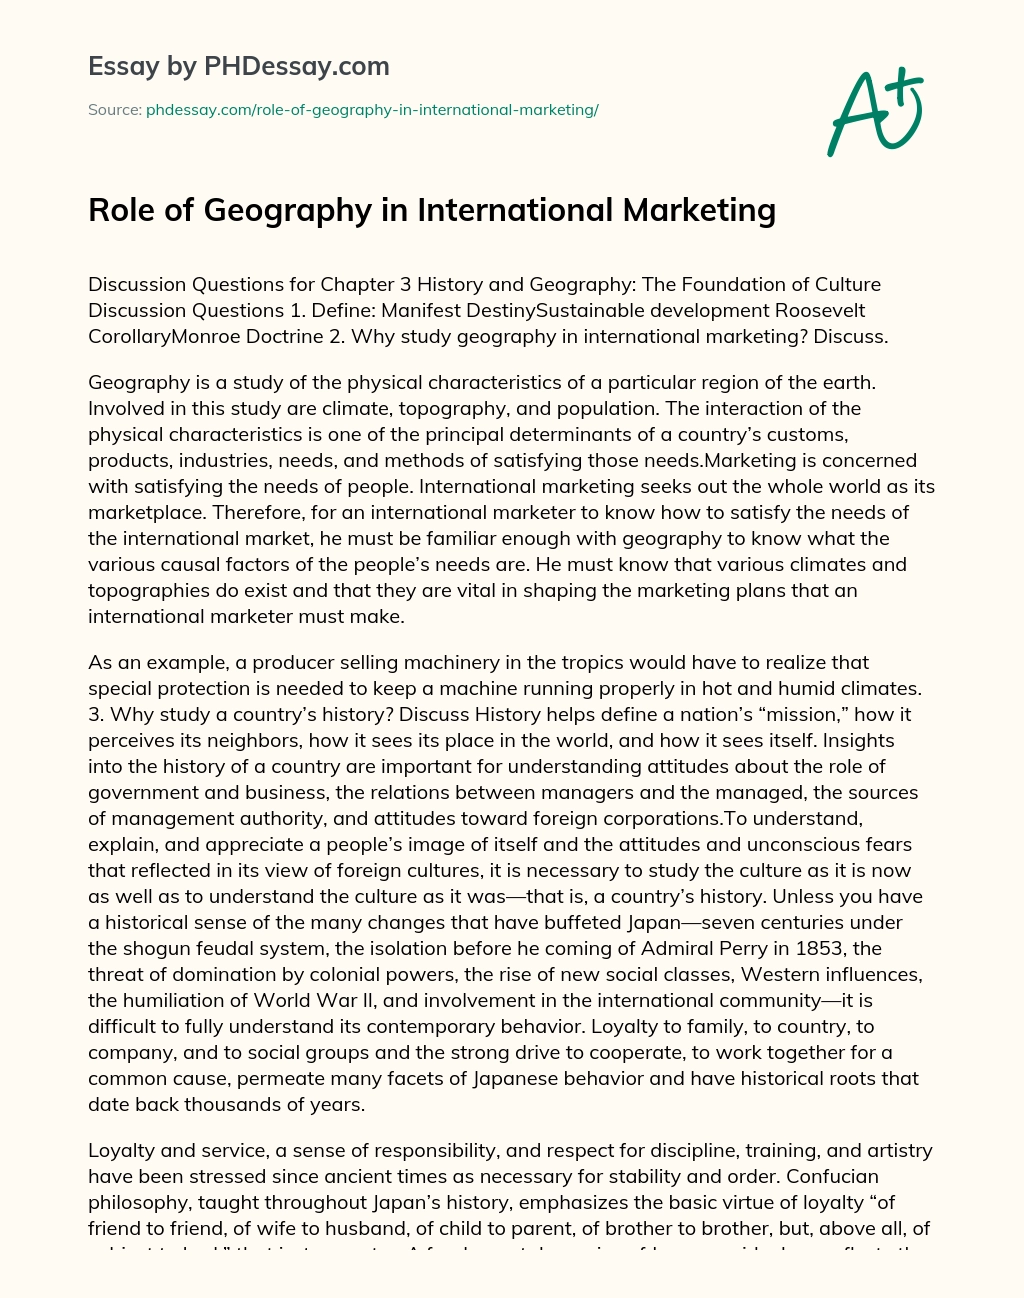 Role of Geography in International Marketing essay